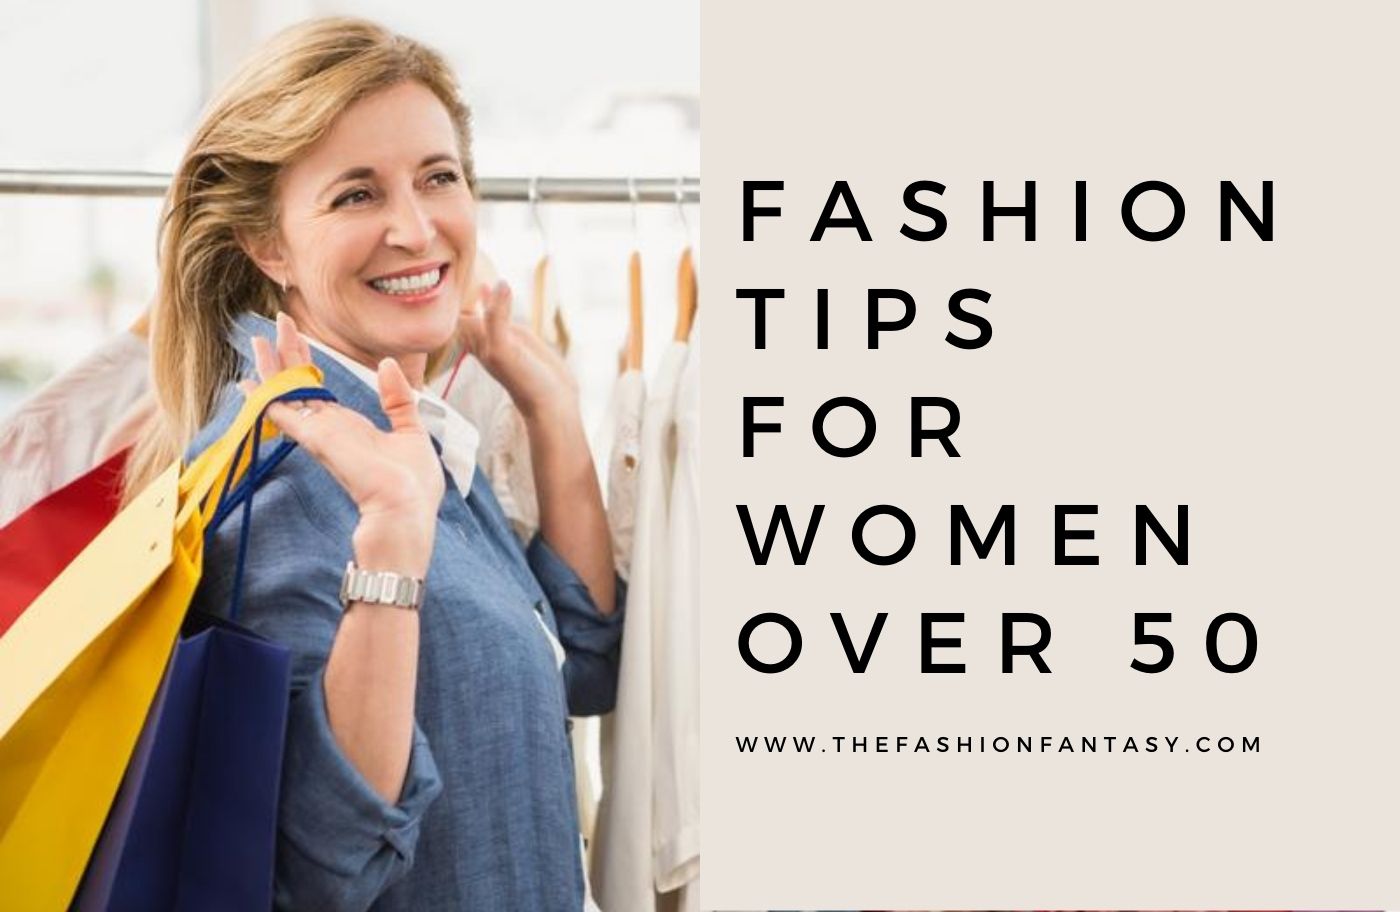 Fashion Tips For Women Over 50 |The Fashion Fantasy